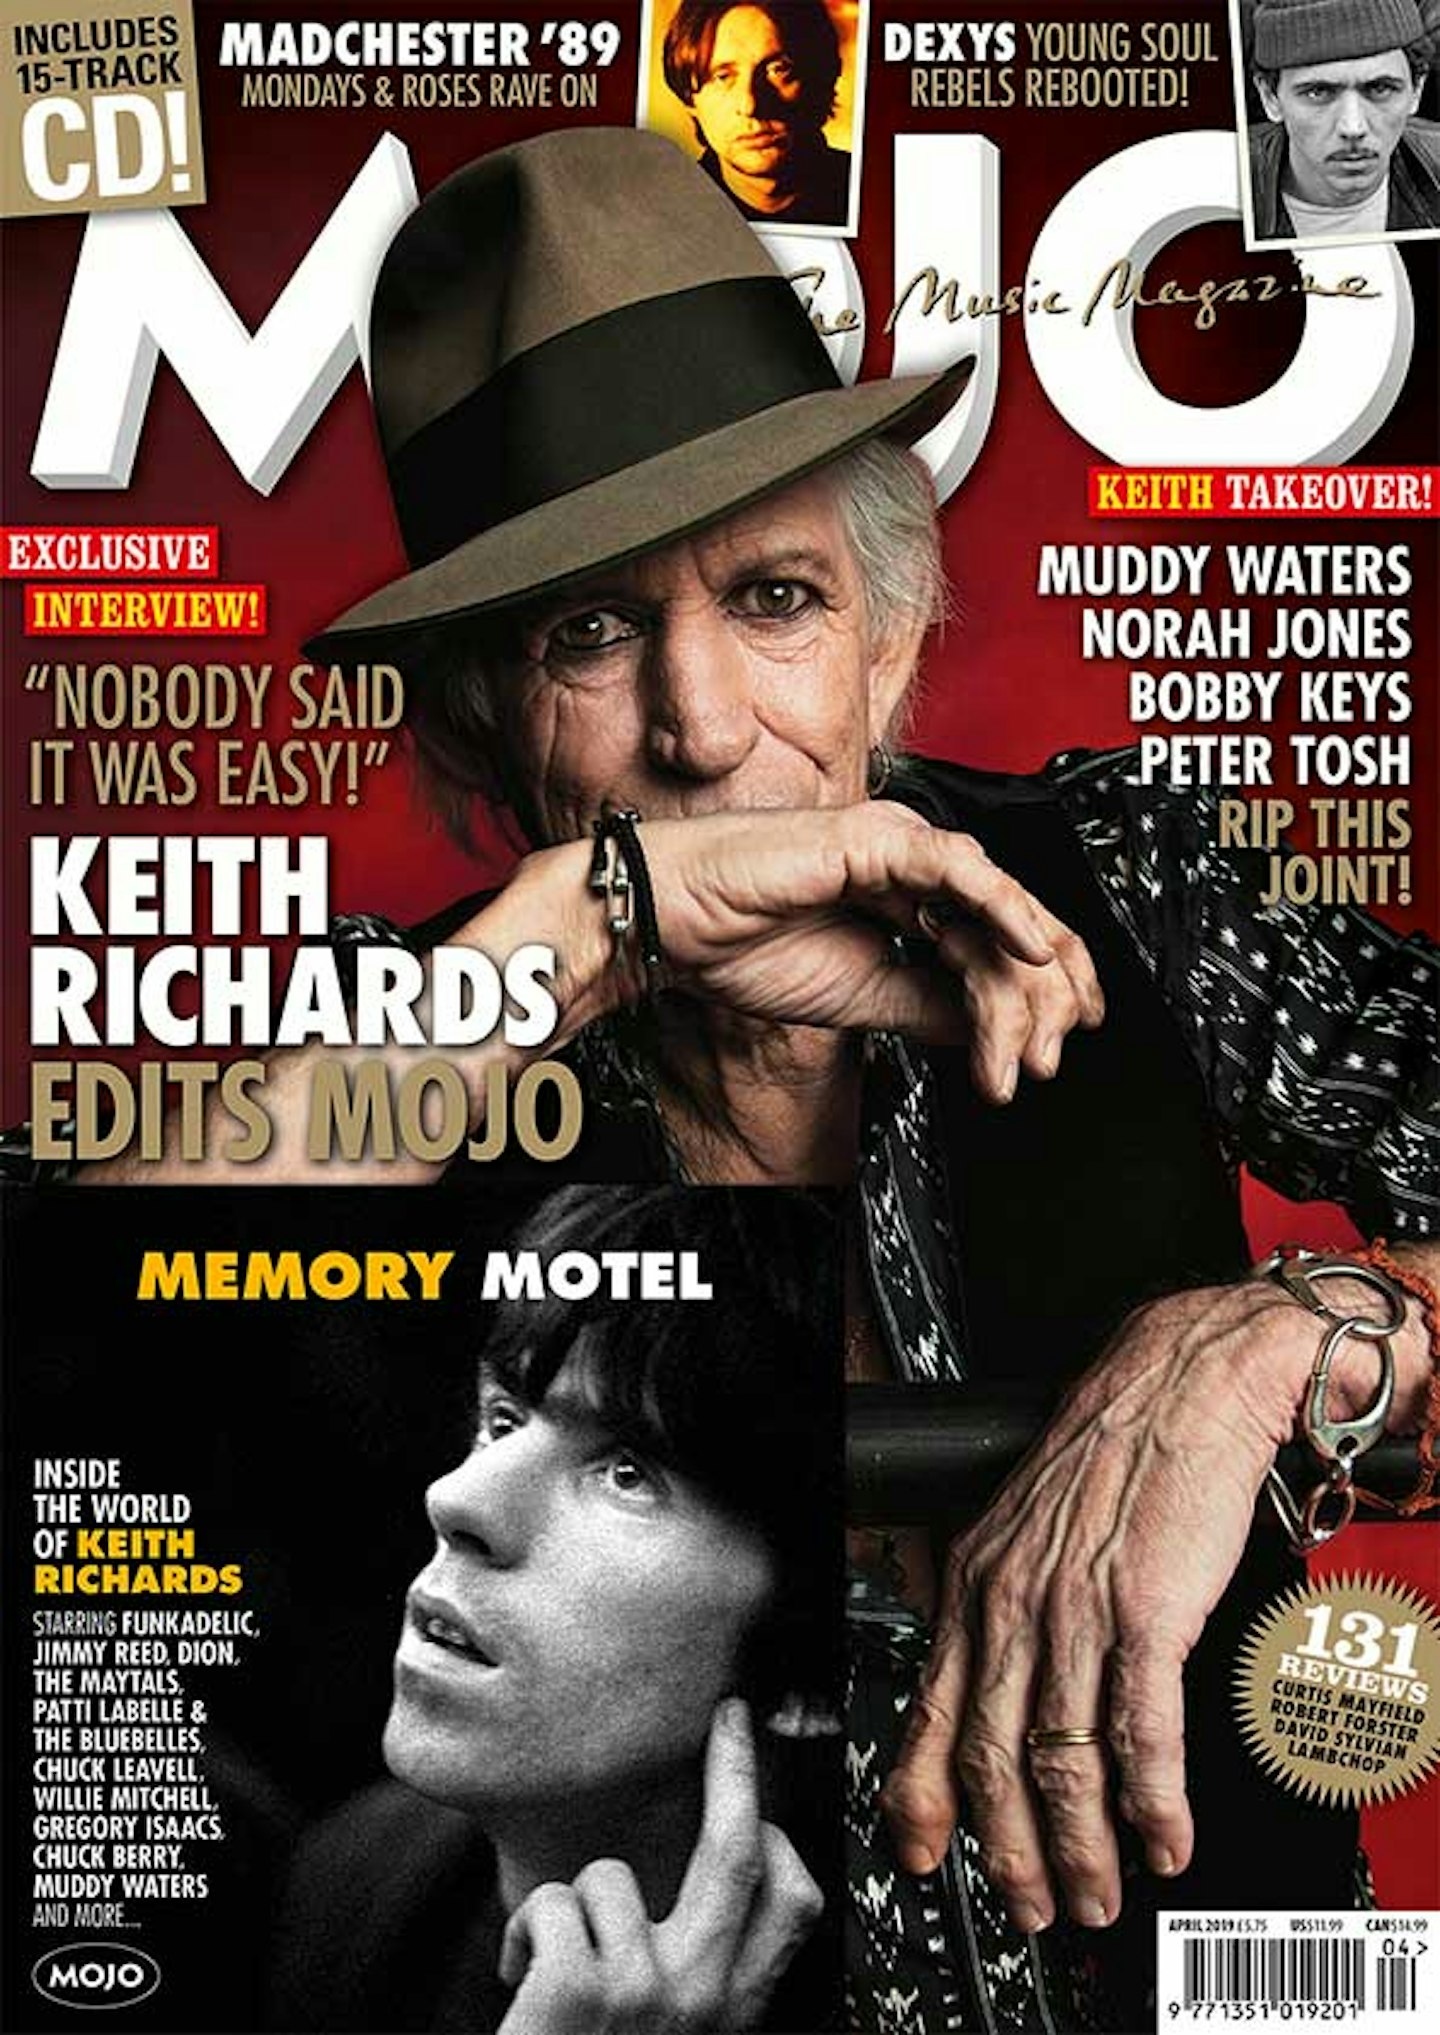 MOJO 305 – April 2019: Keith Richards Edits MOJO!